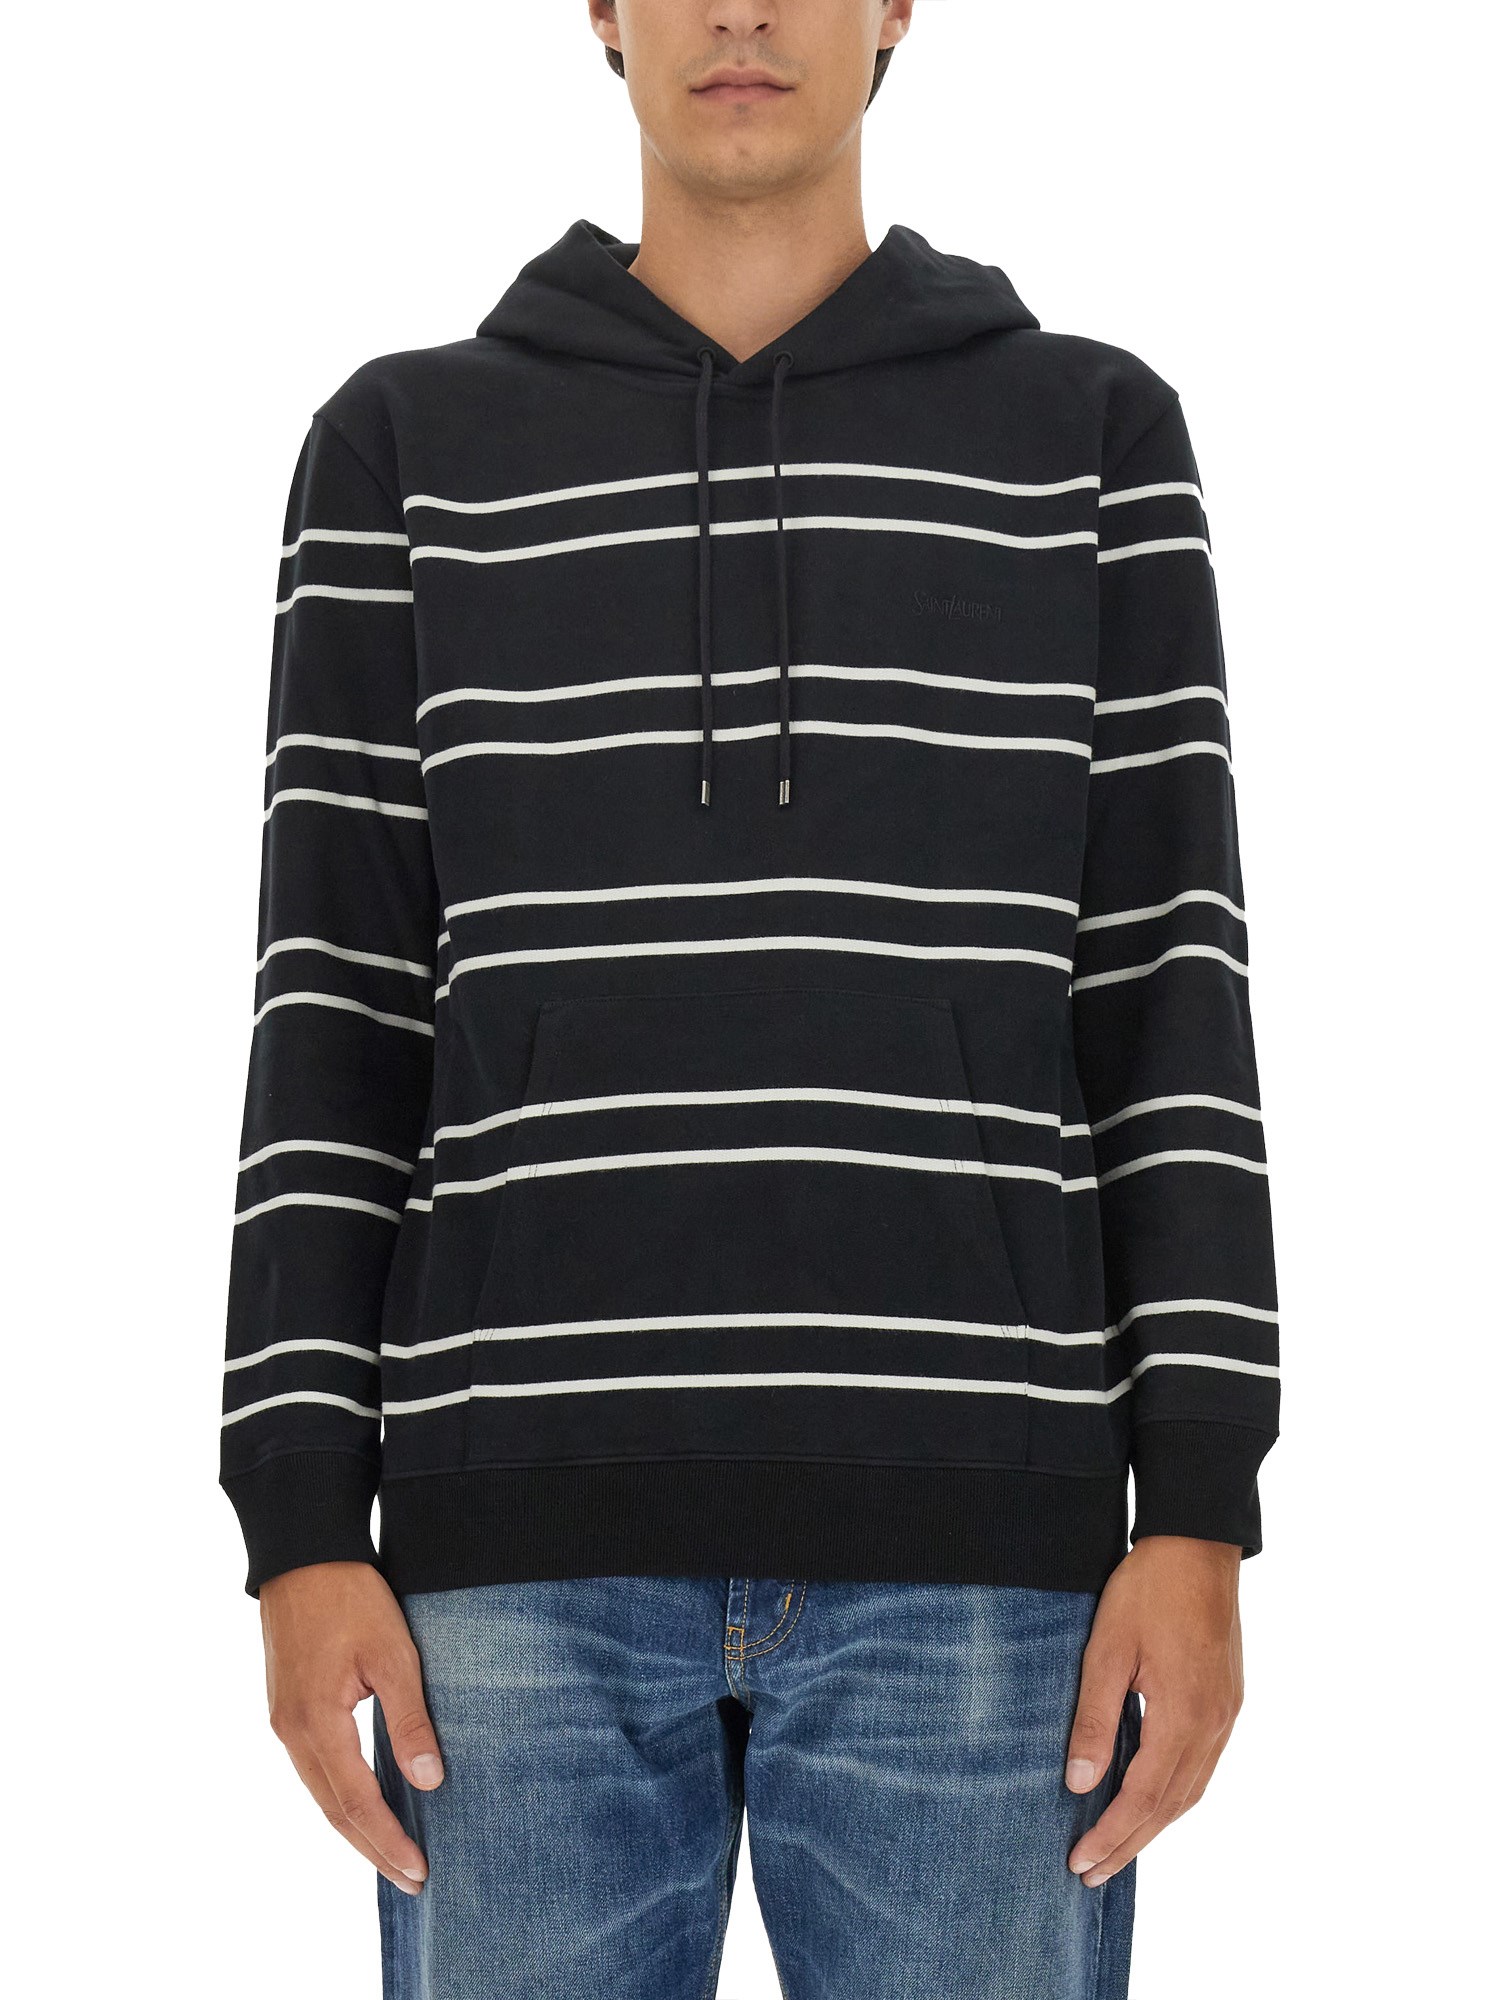 Saint Laurent Striped Sweatshirt In Black